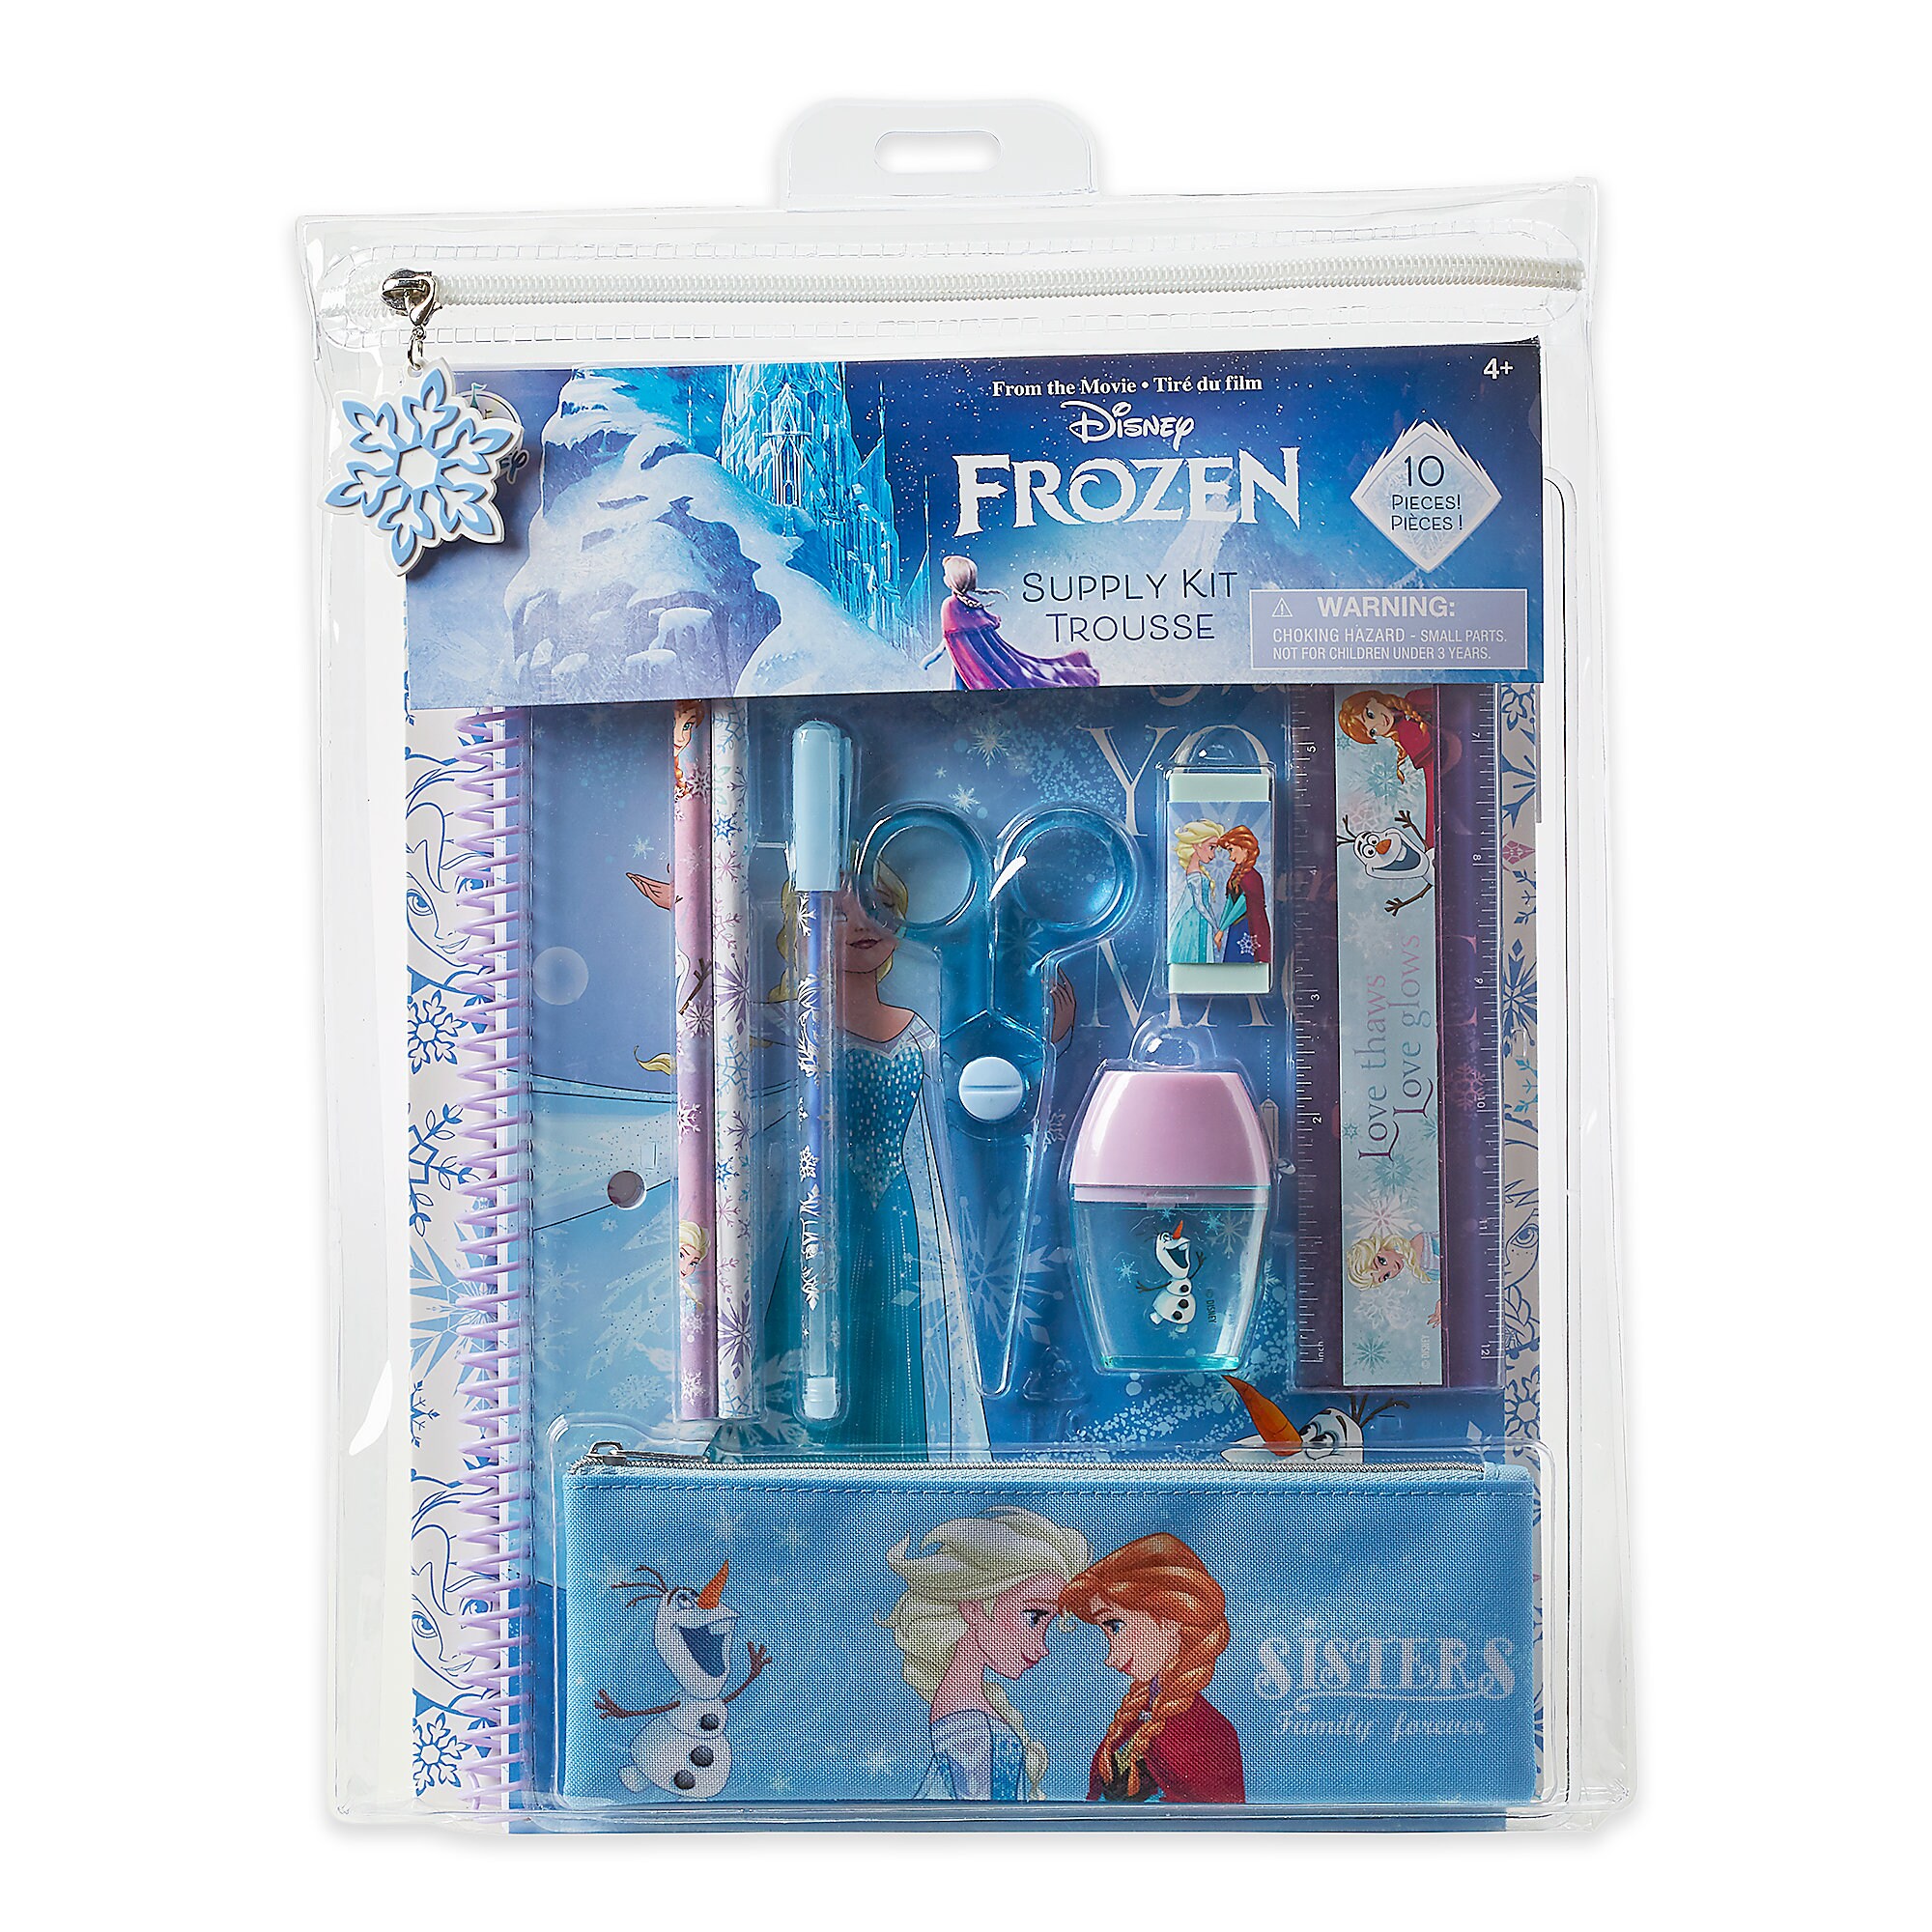 Frozen Stationery Supply Kit